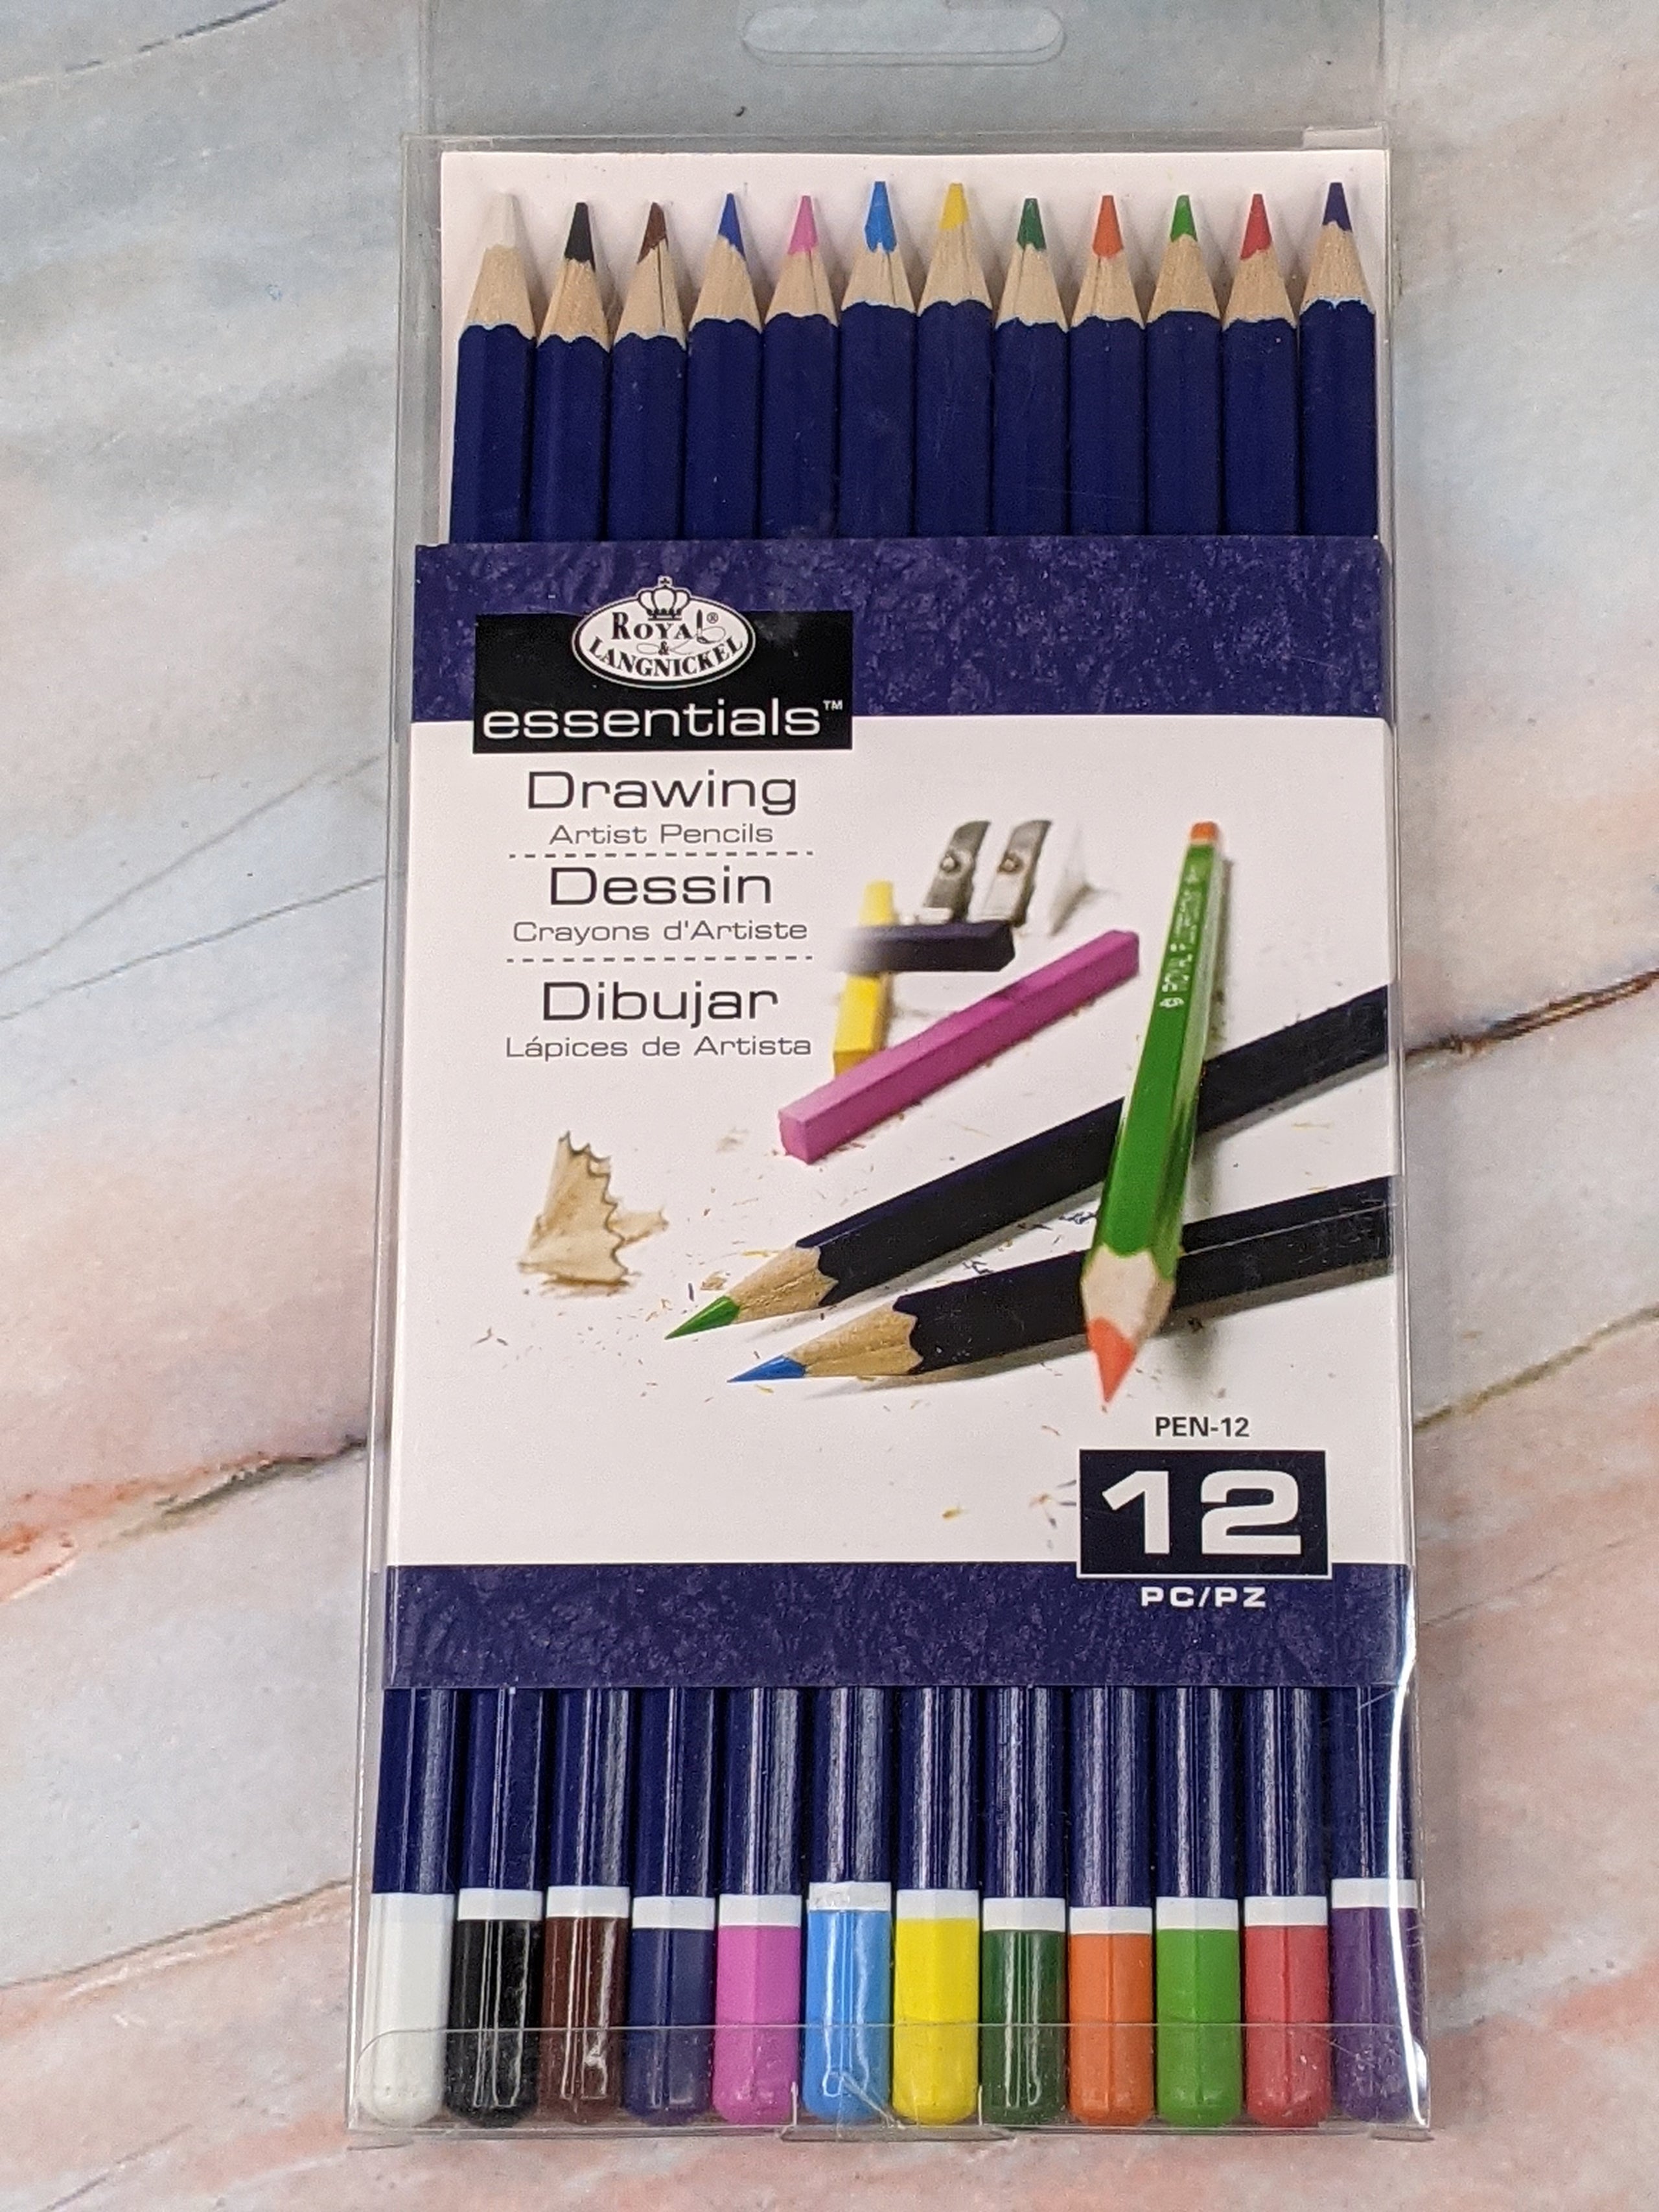 Drawing Artist Pencils by Royal & Langnickel